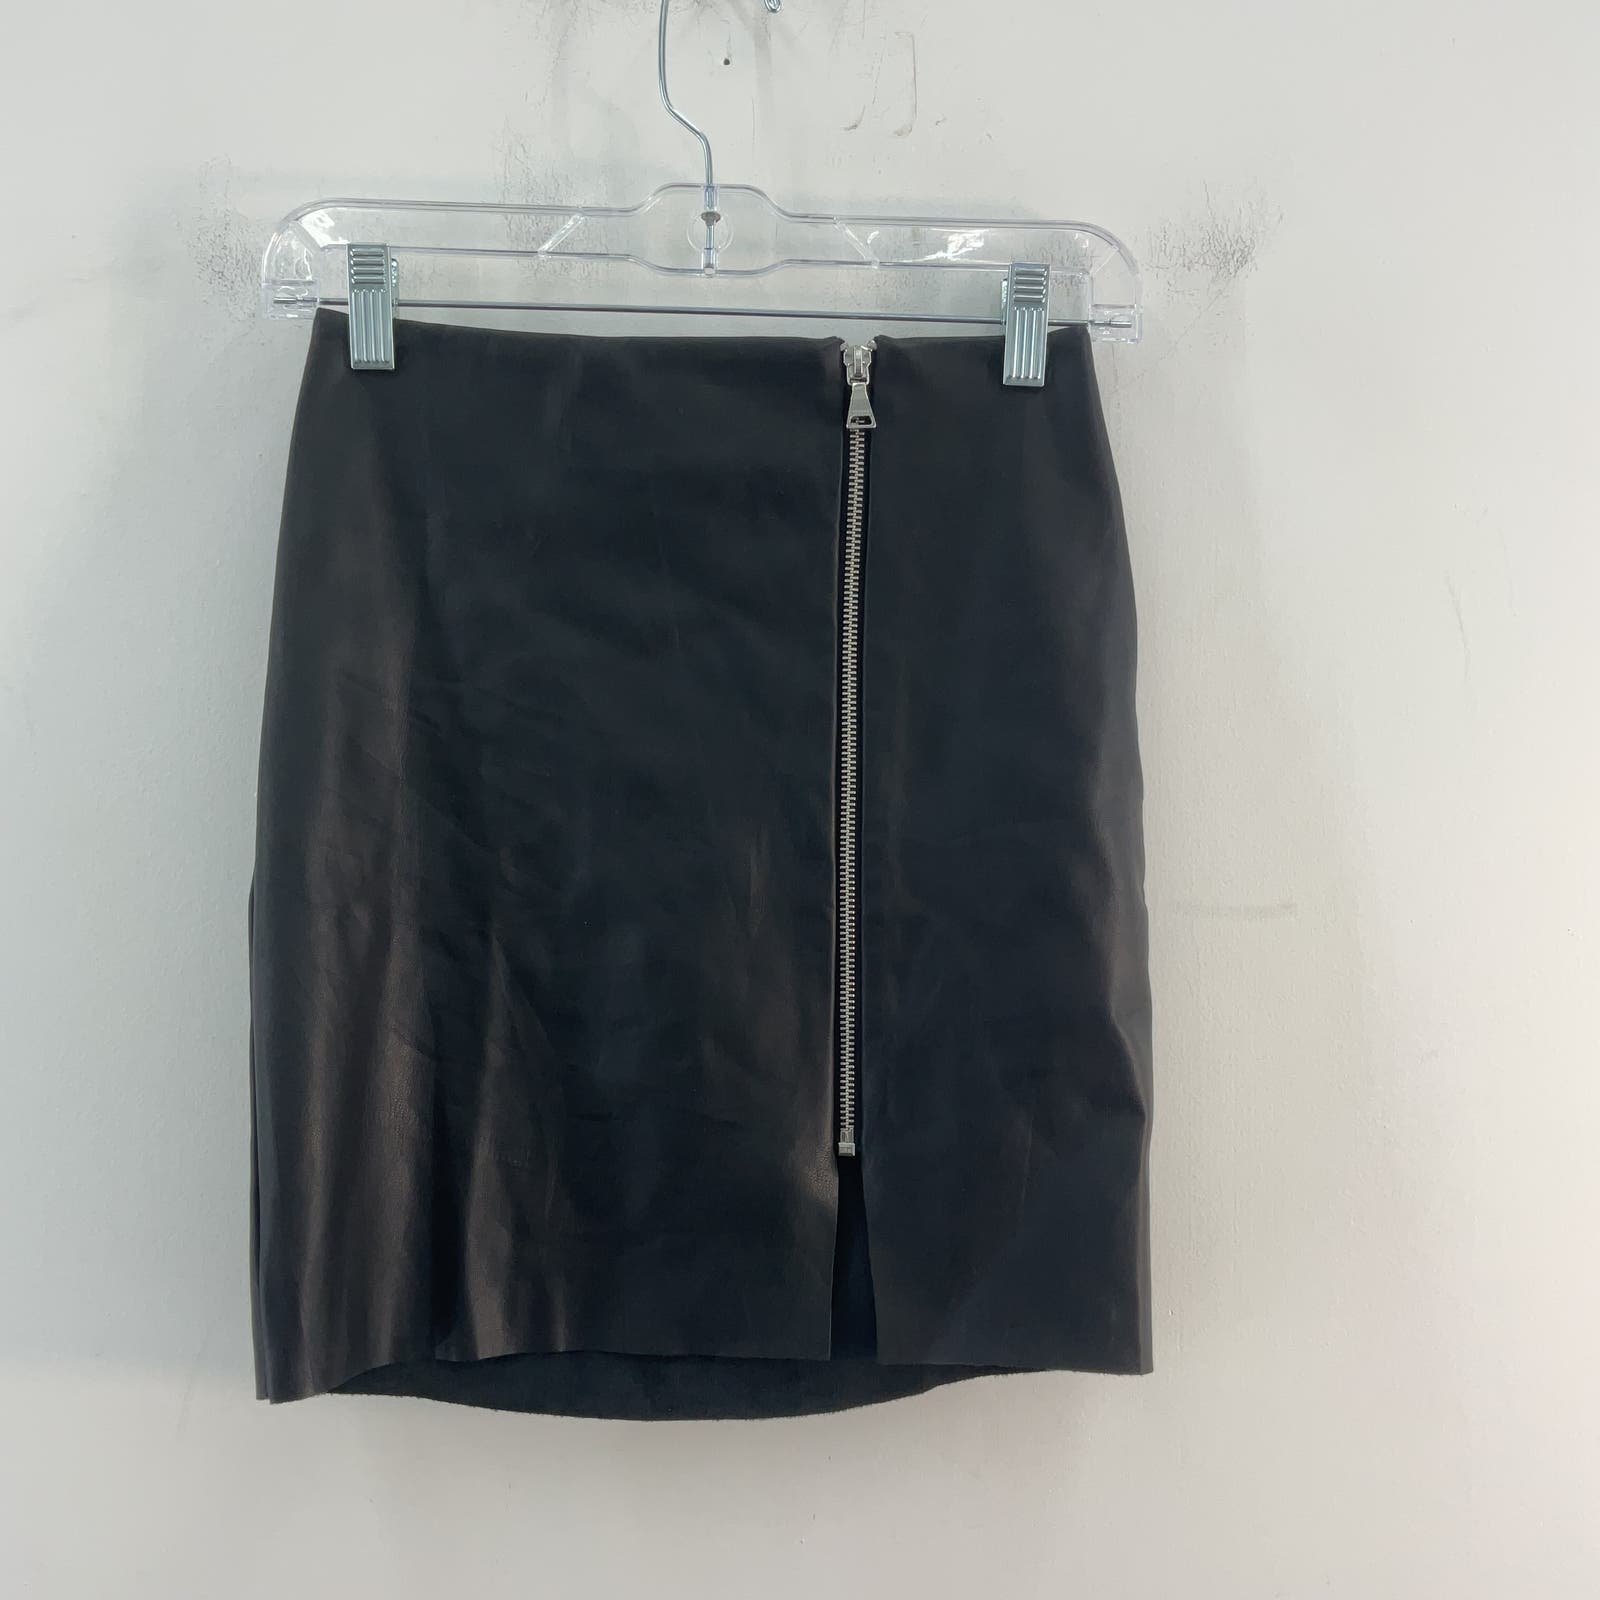 Great NWT Express Black Faux Leather Mini Skirt, Size 0 OL7Ir3Mvi Online Shop